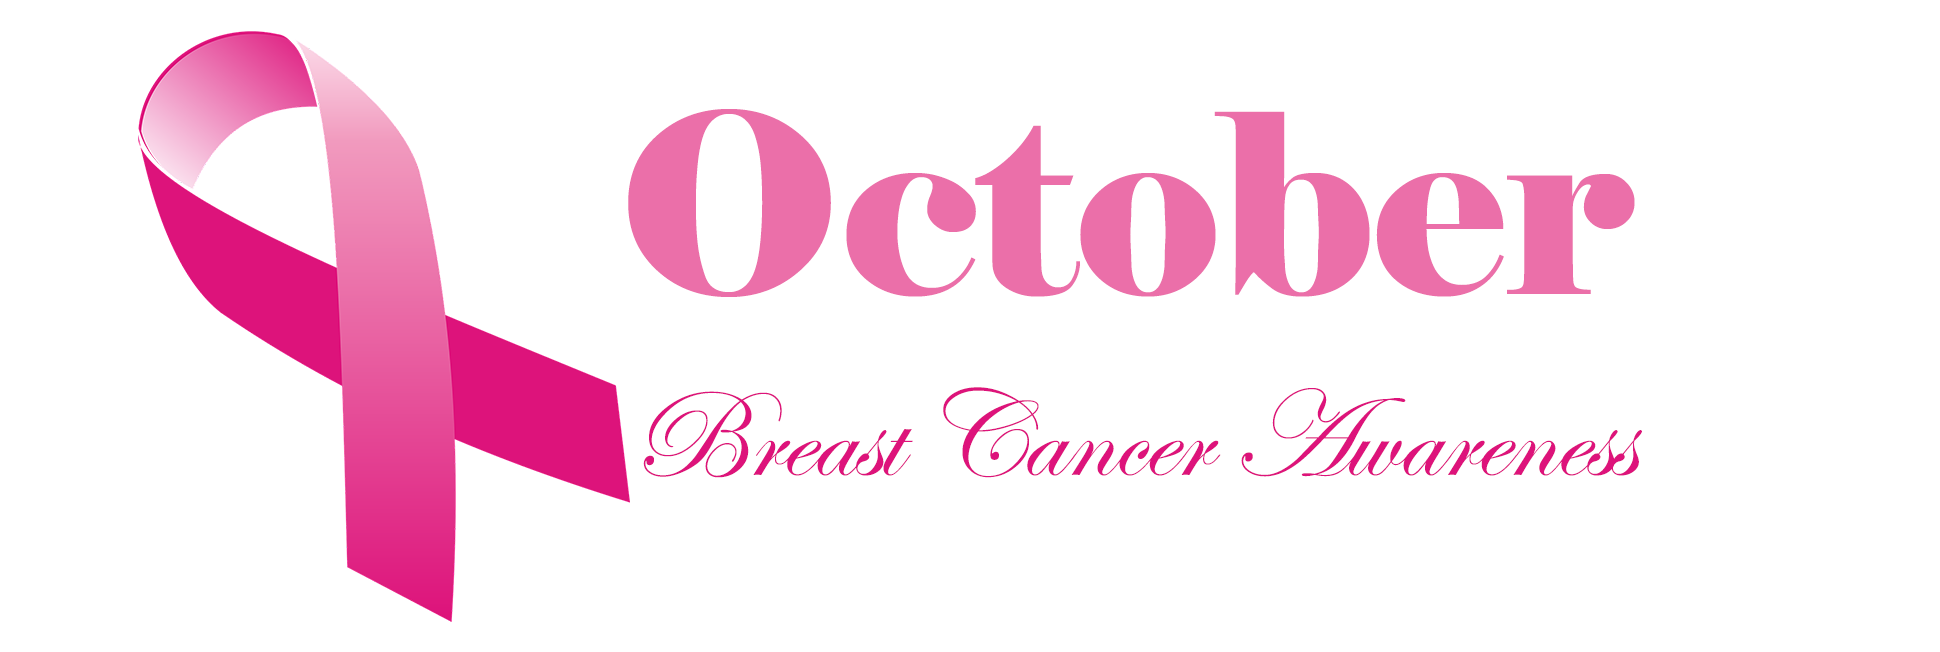 October Breast Cancer Awareness Month Logo